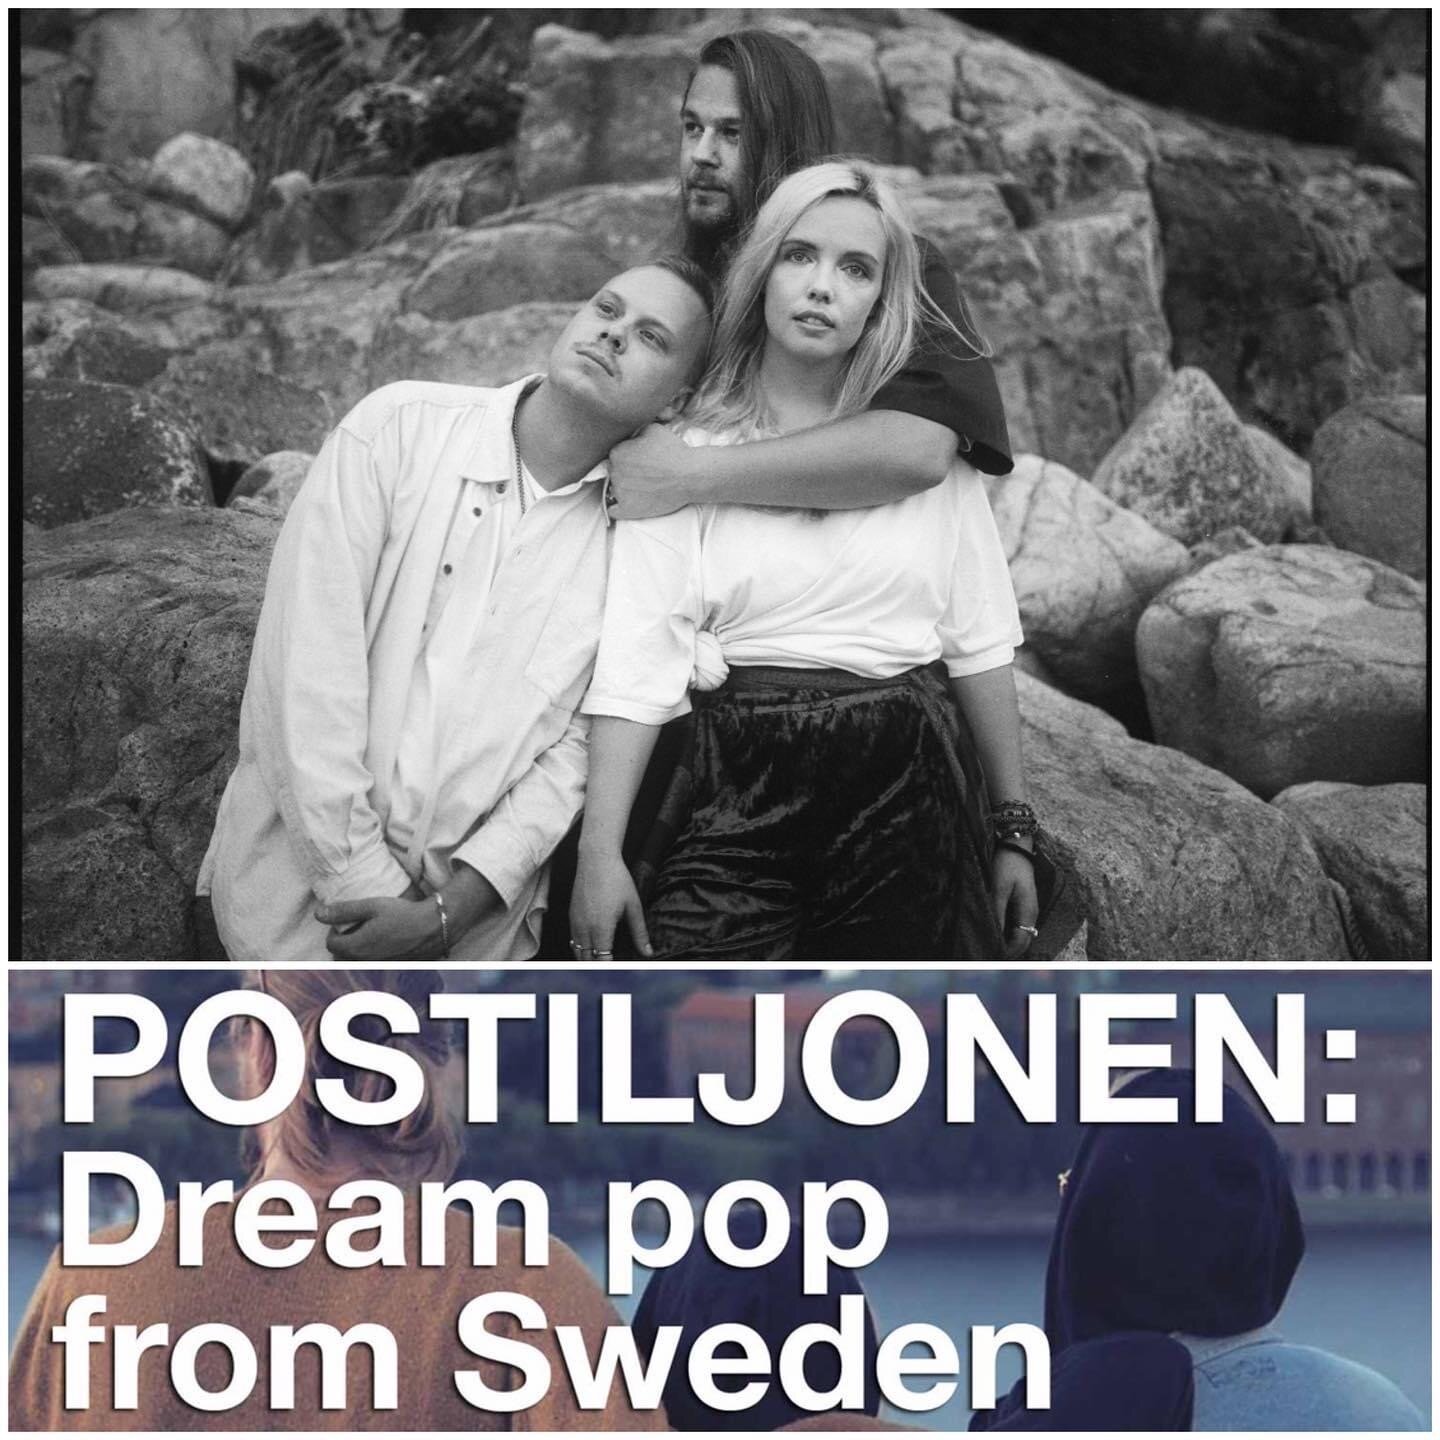 Abe Deyo: Postiljonen, the Scandinavian band whose China tours he has helped to manage.